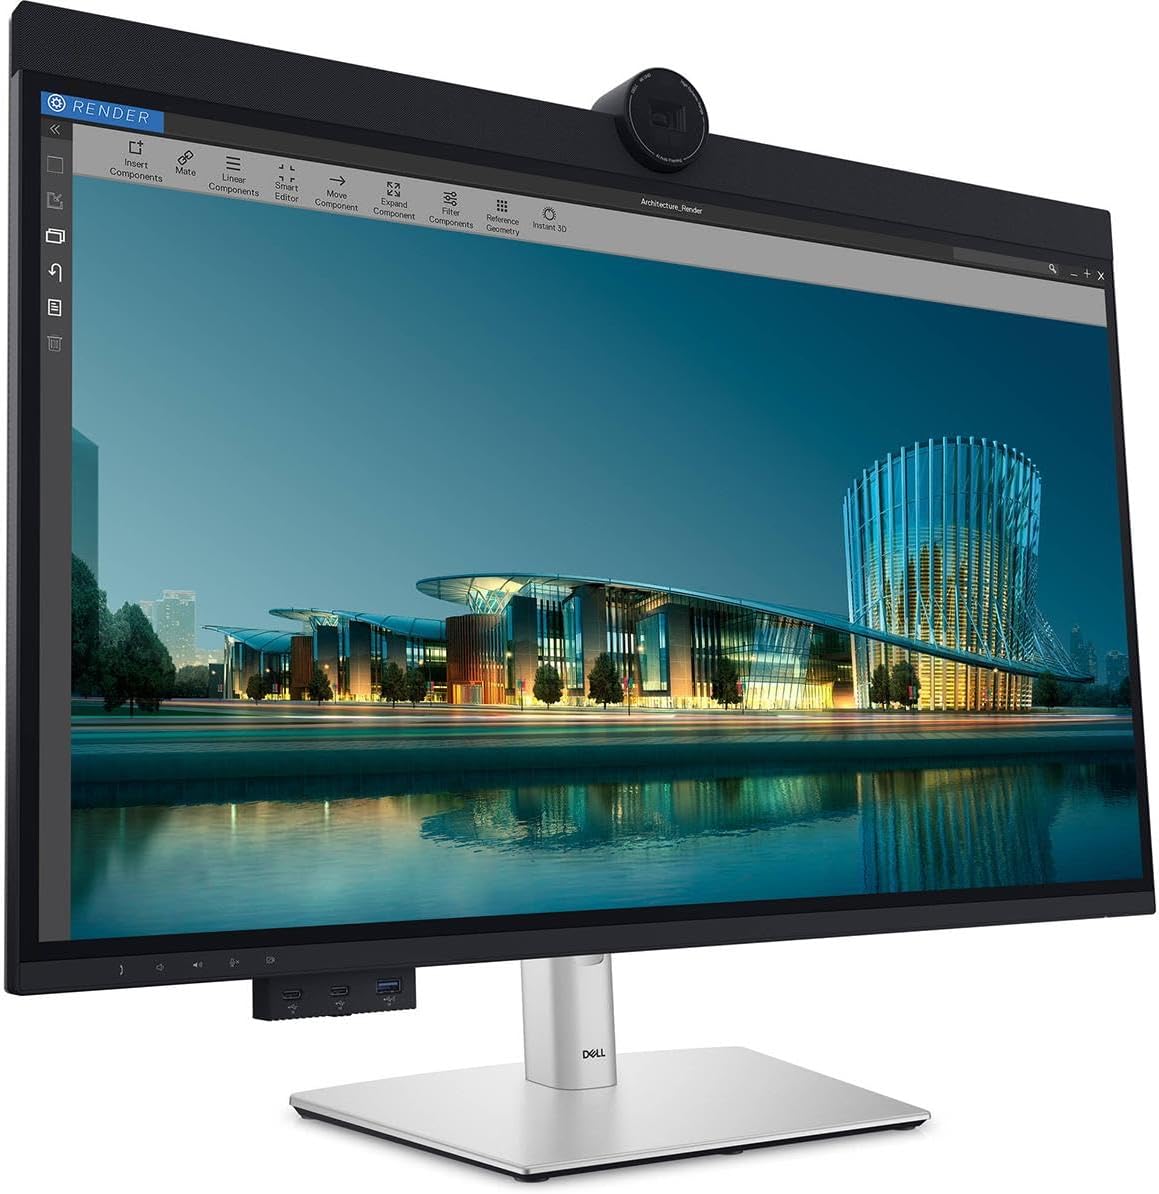 Dell UltraSharp editing monitor